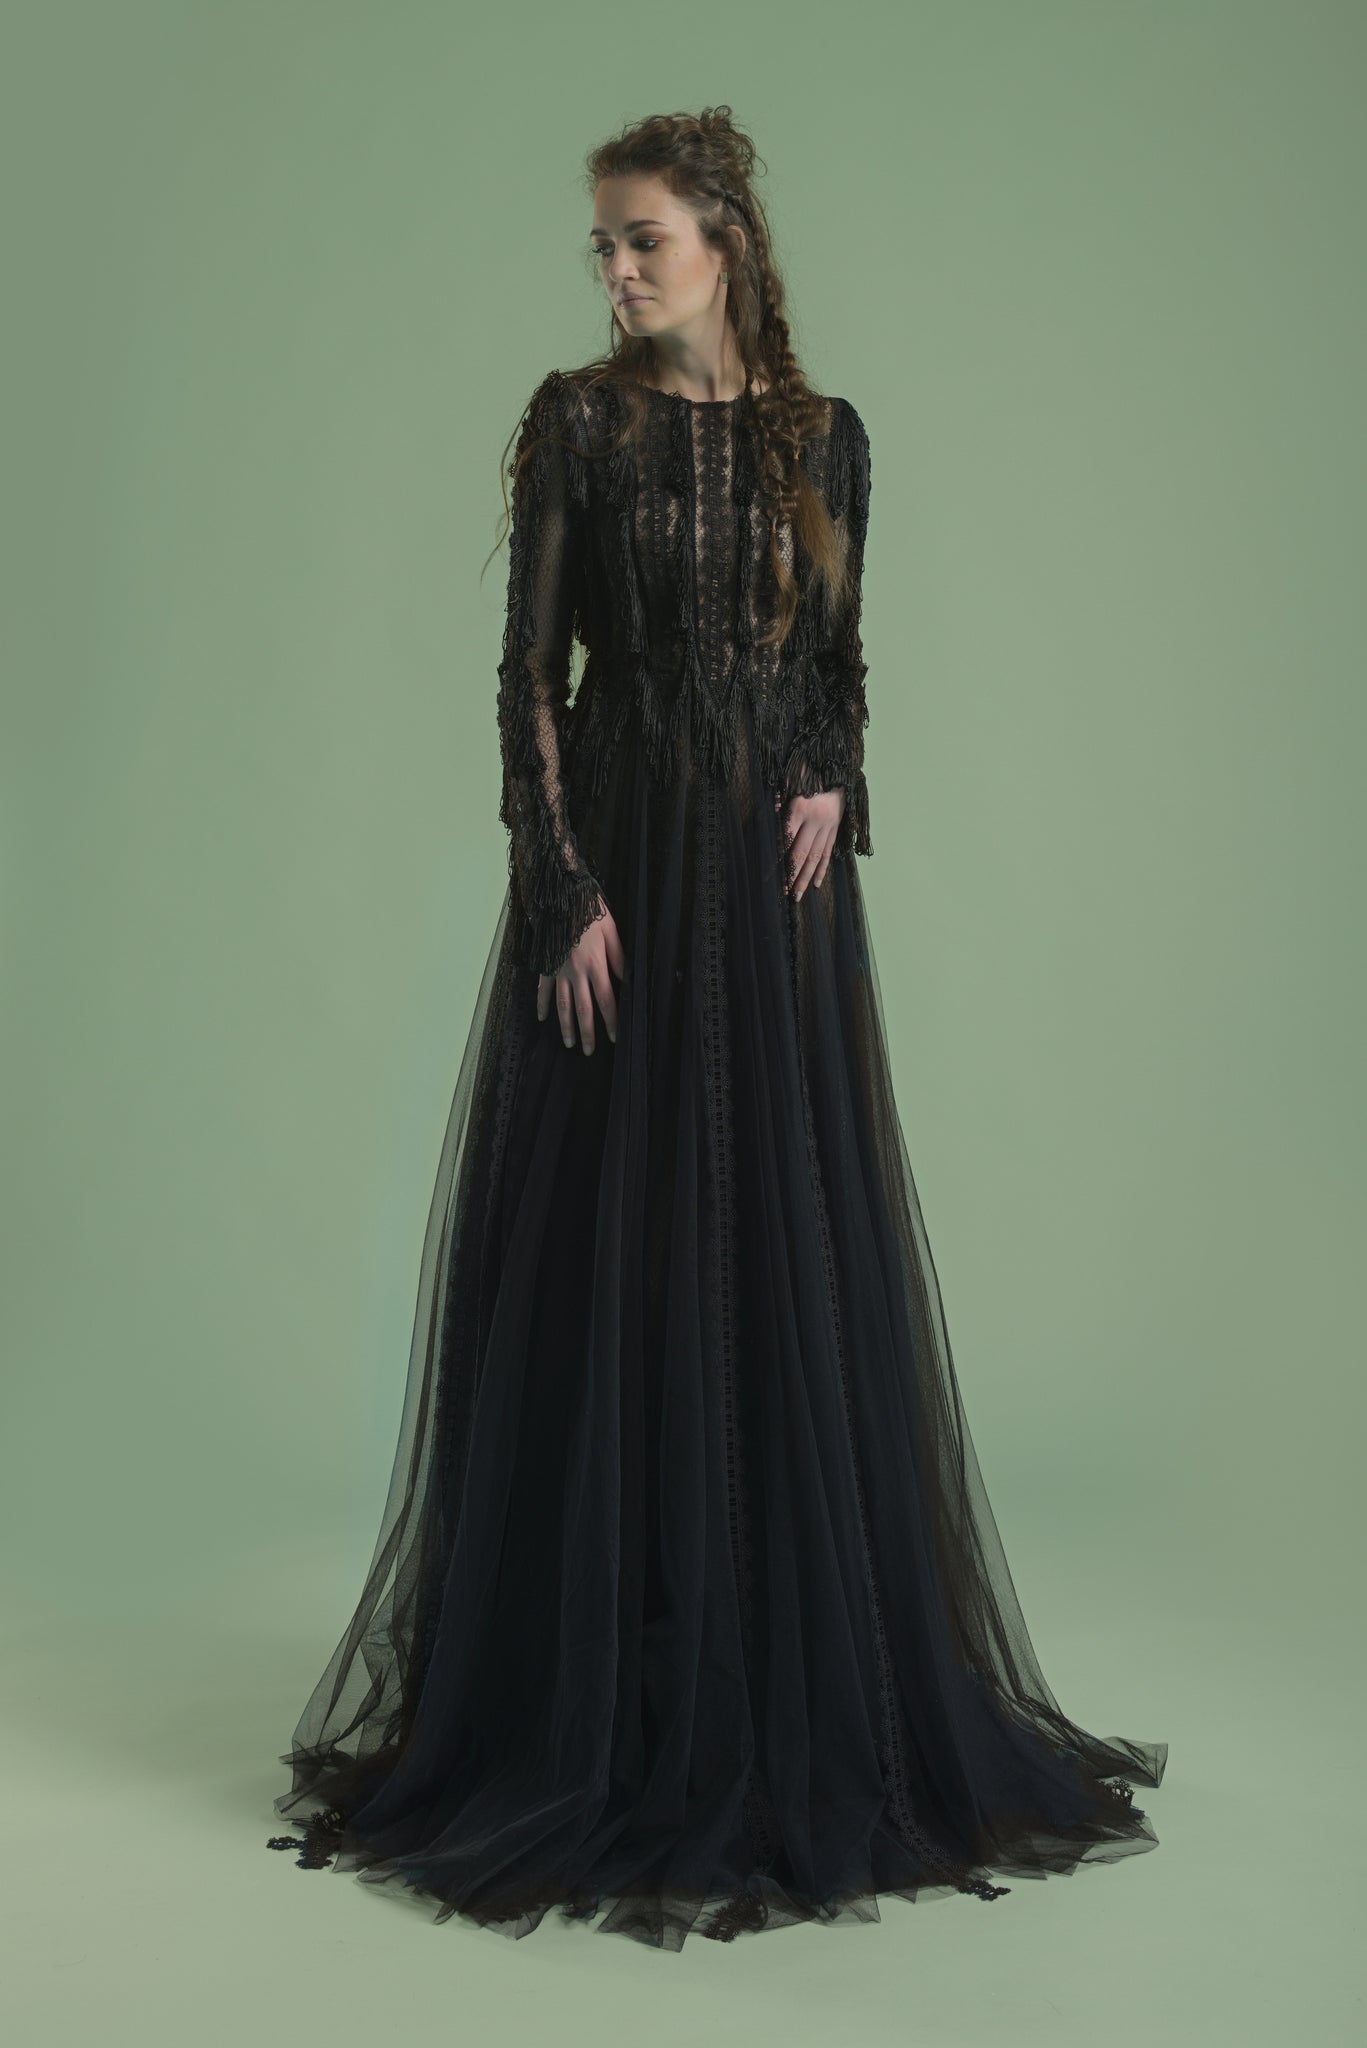 Lace Dress with Fringe Details